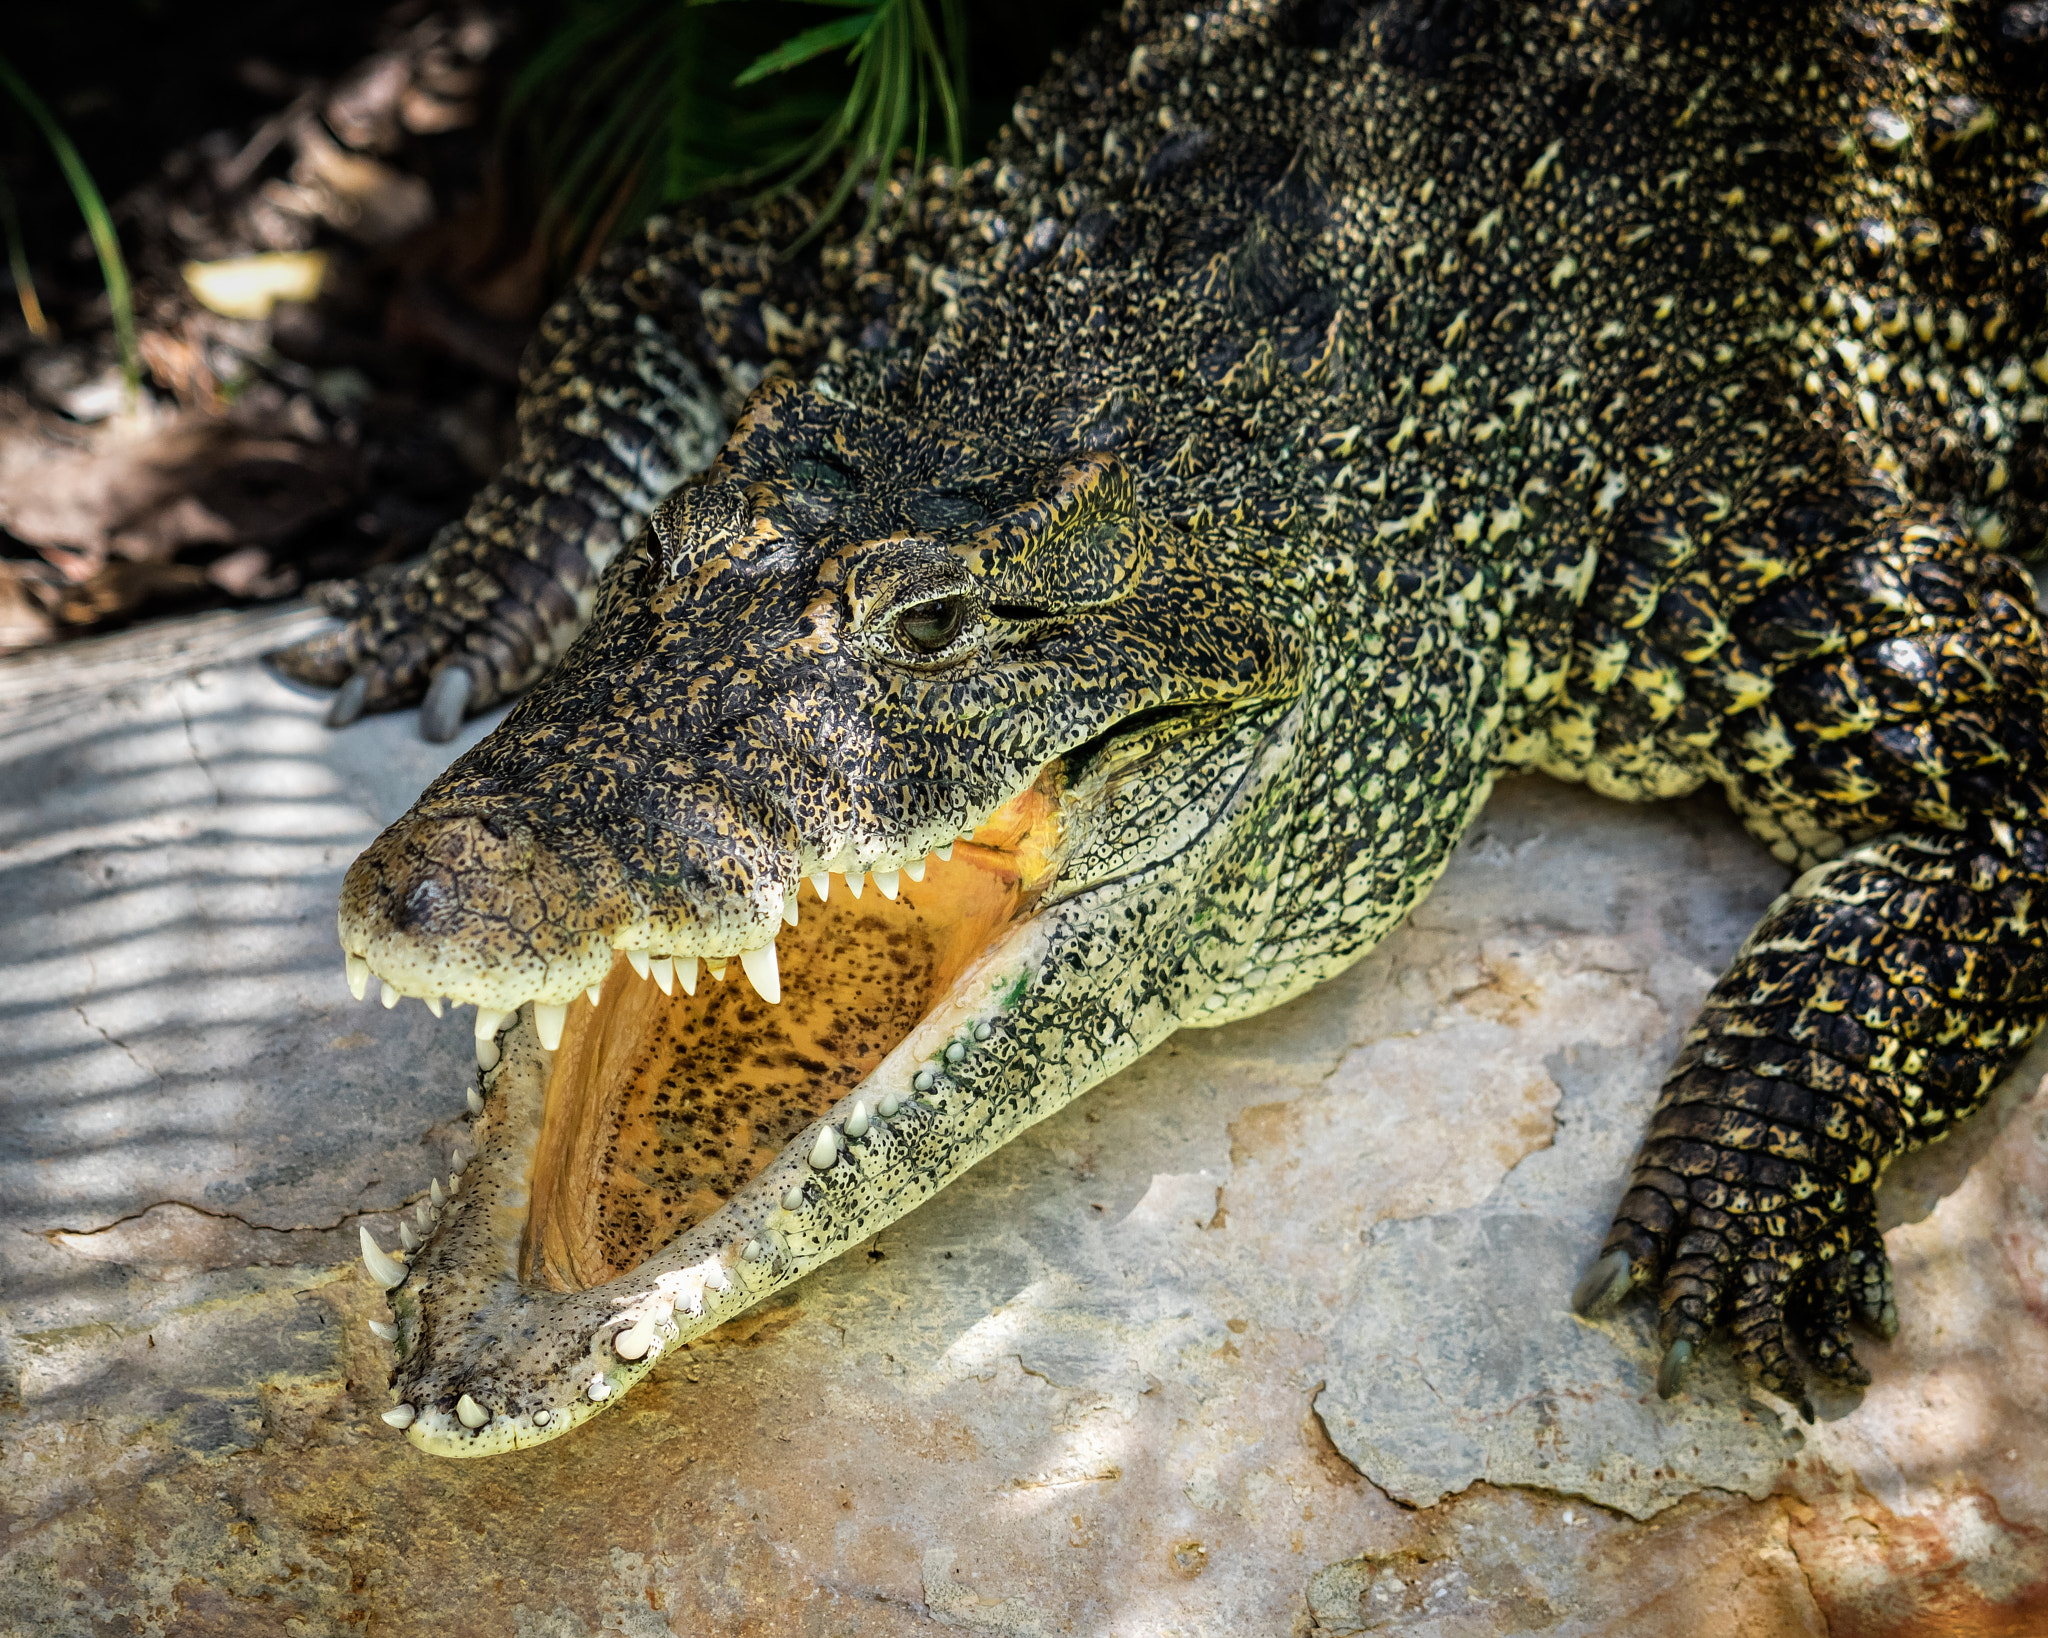 Cuban Crocodile (Crocodylus rhombifer)